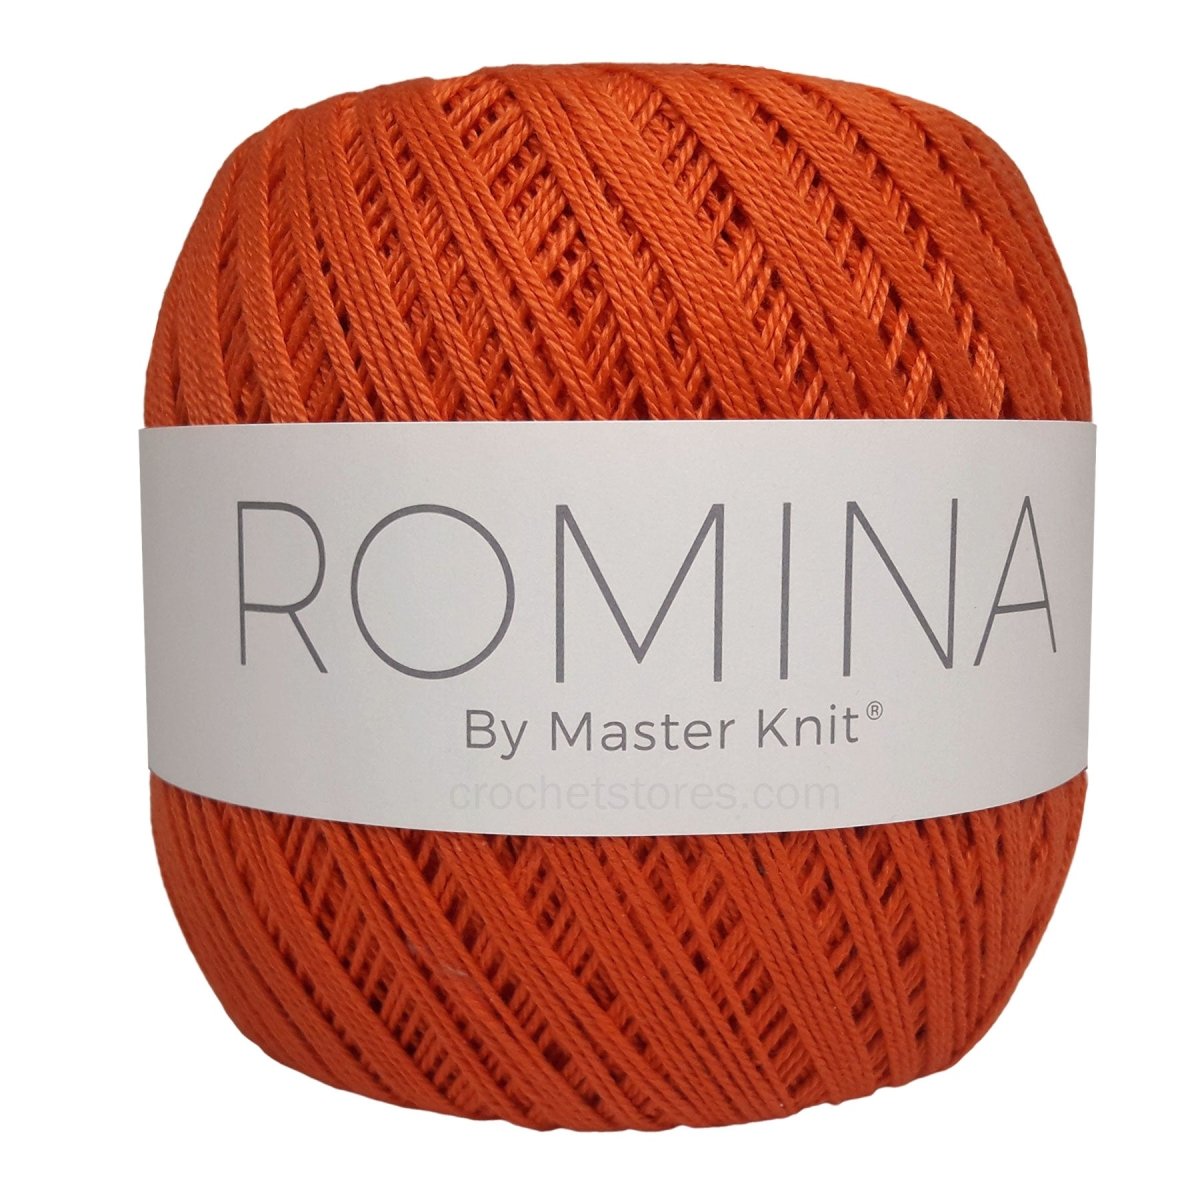 ROMINA - Crochetstores9335-237745051438579